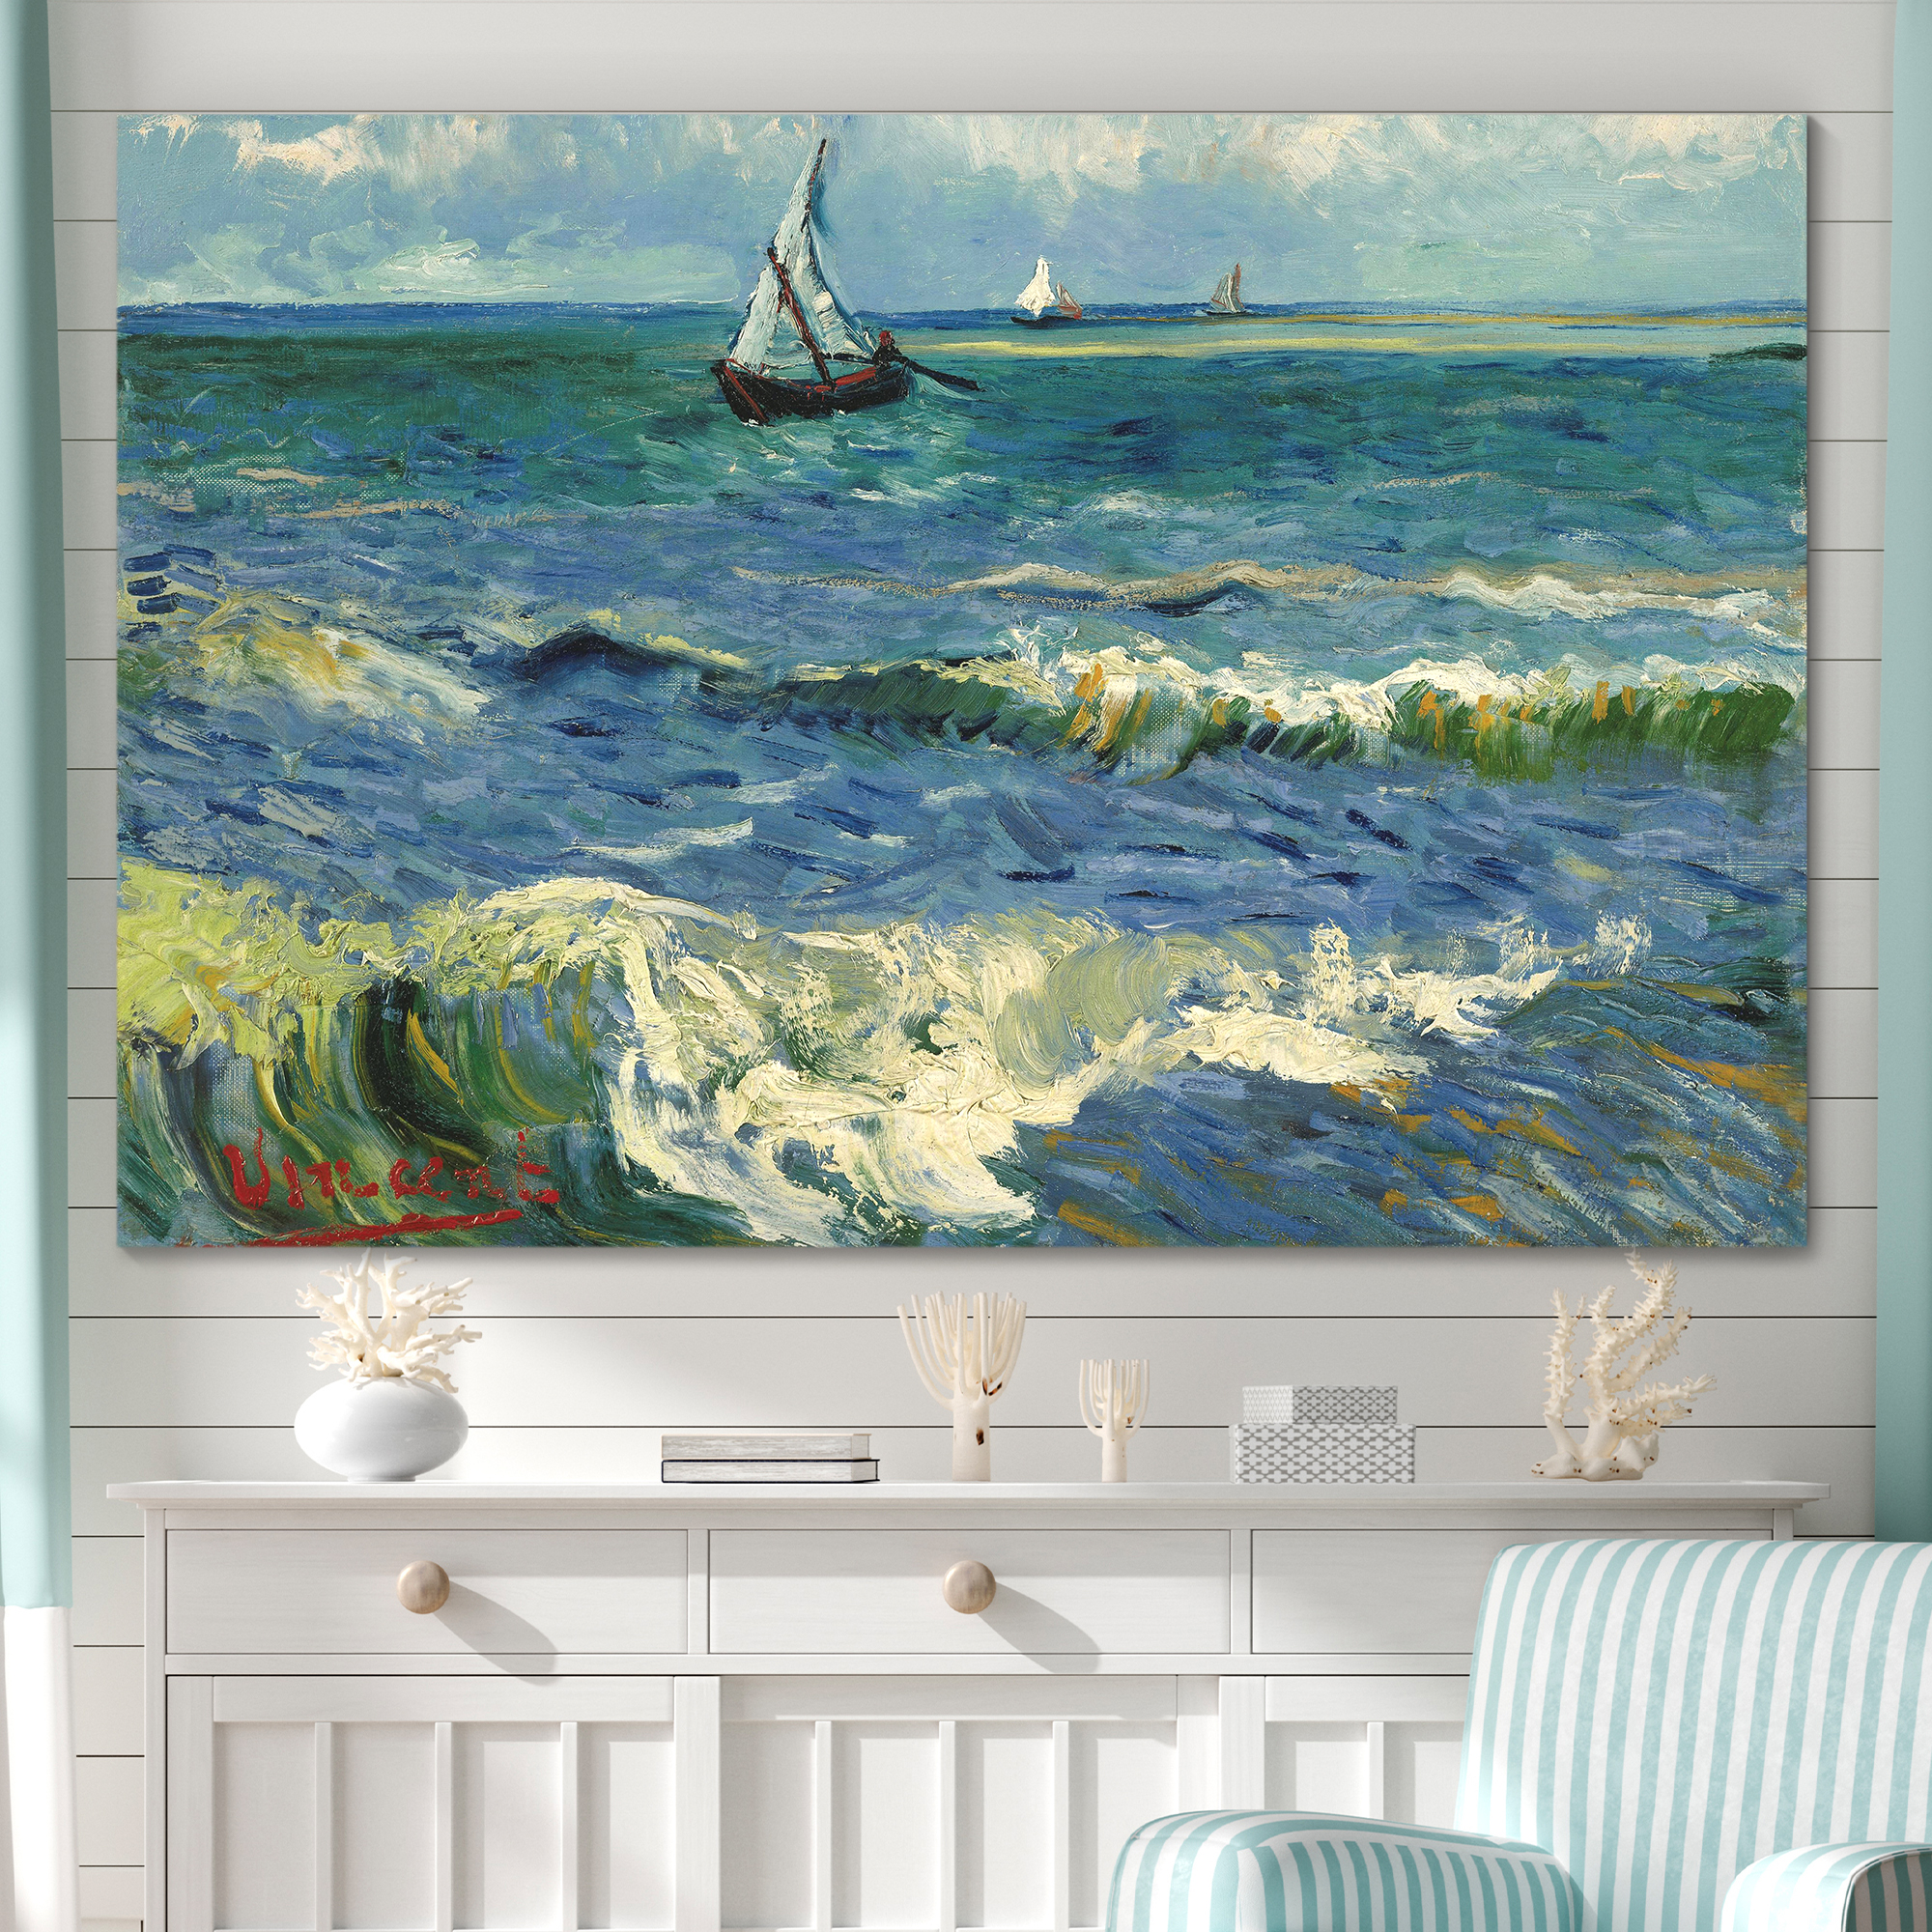 Seascape Near Les Saintes Maries De La Mer by Vincent Van Gogh - Oil Painting Reproduction on Canvas Prints Wall Art, Ready to Hang - 32